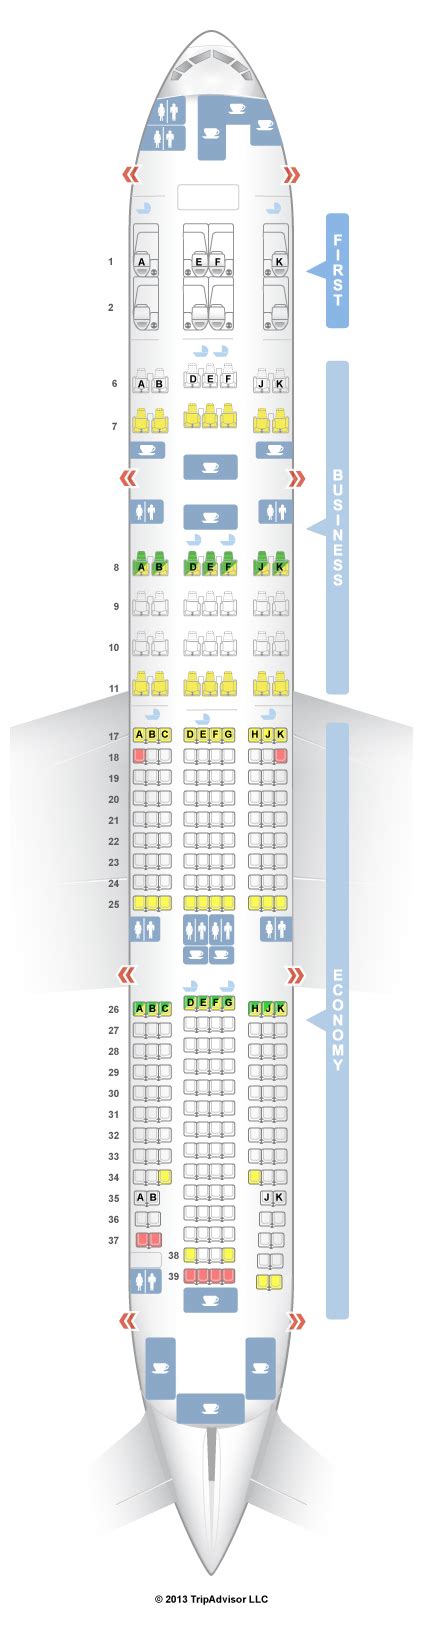 Emirates Boeing Er Business Class Seat Map Seatguru Seat Map